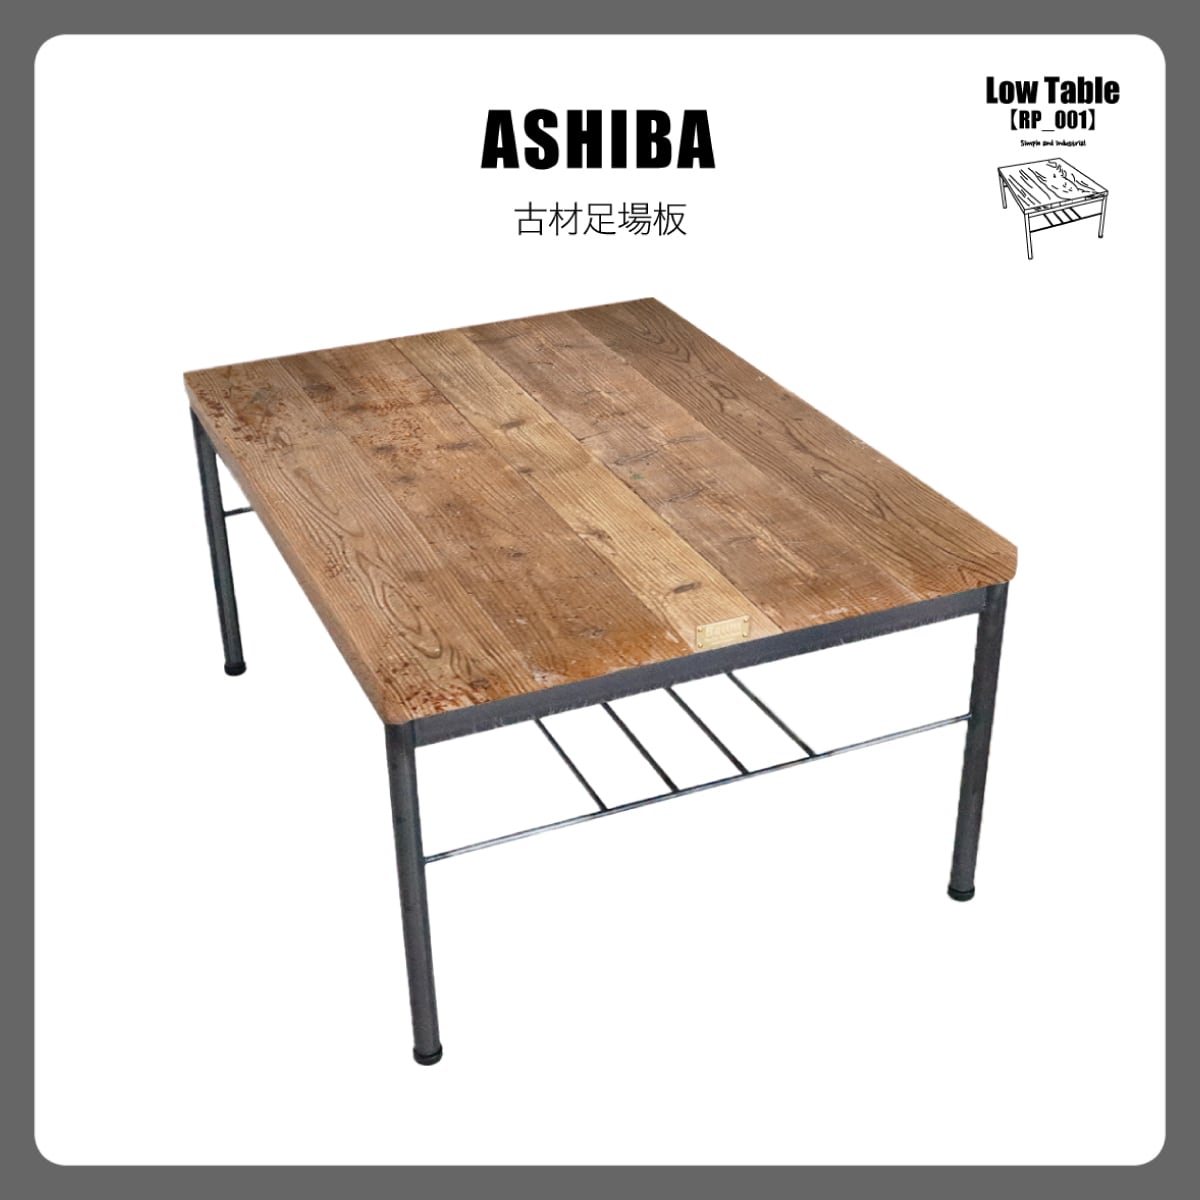 27 [Low Table【RP_001】(ASHIBA)] ローテーブル カフェテーブル ダイニングテーブル テーブル 食卓 机 古材足場板  アイアン シンプル ヴィンテージ 男前 ラフ おしゃれ 木製 アンティーク インテリア | 